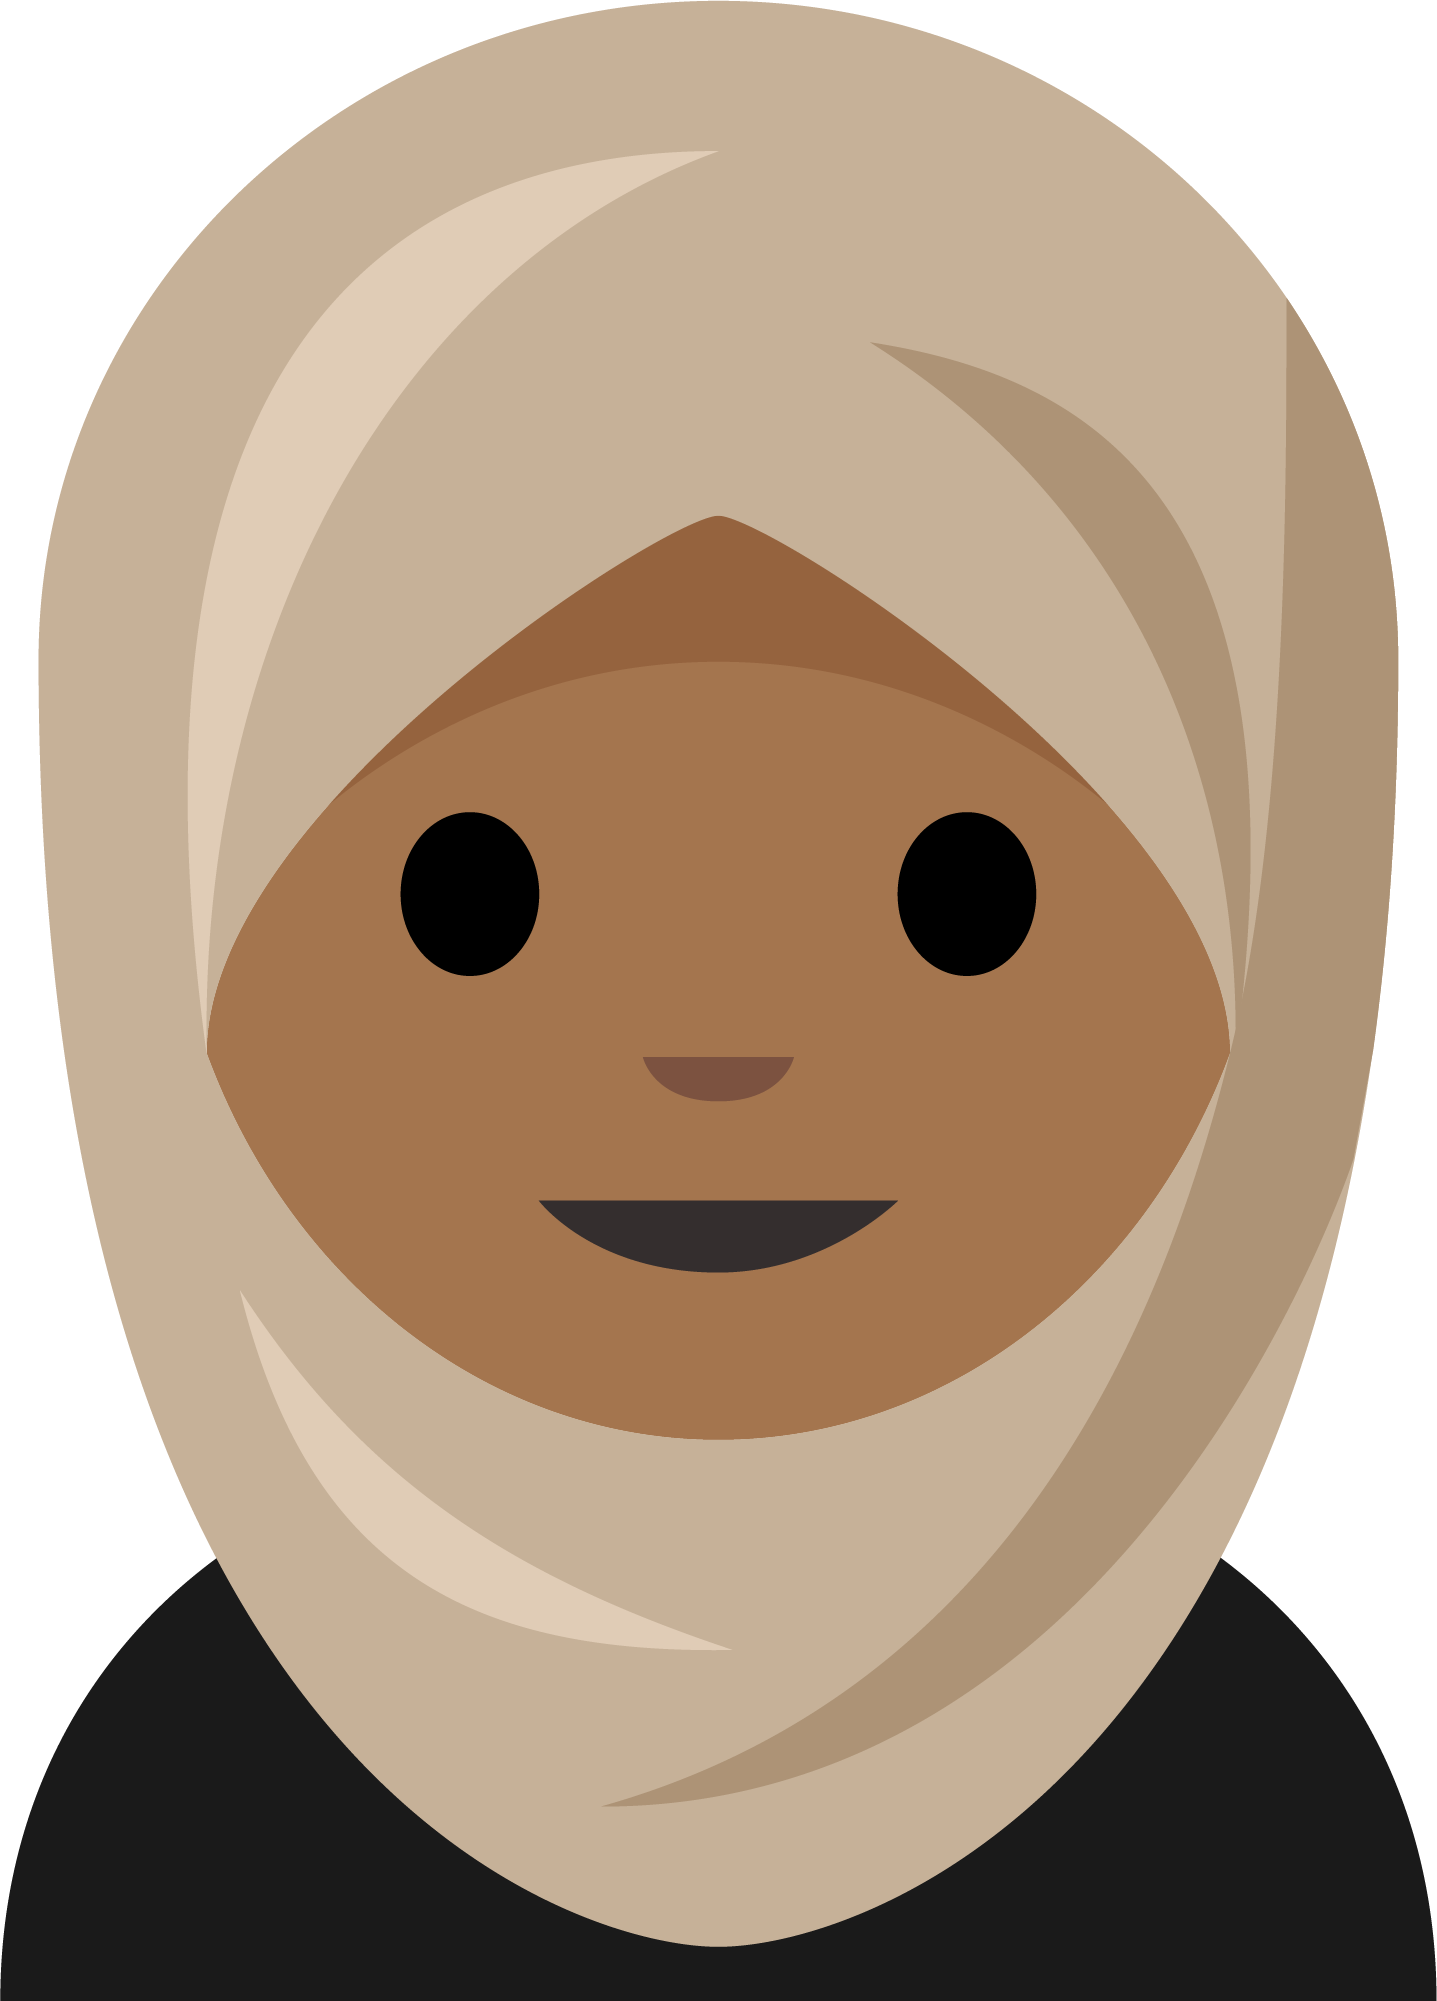 Emoji guidance illustration of person in tan headscarf